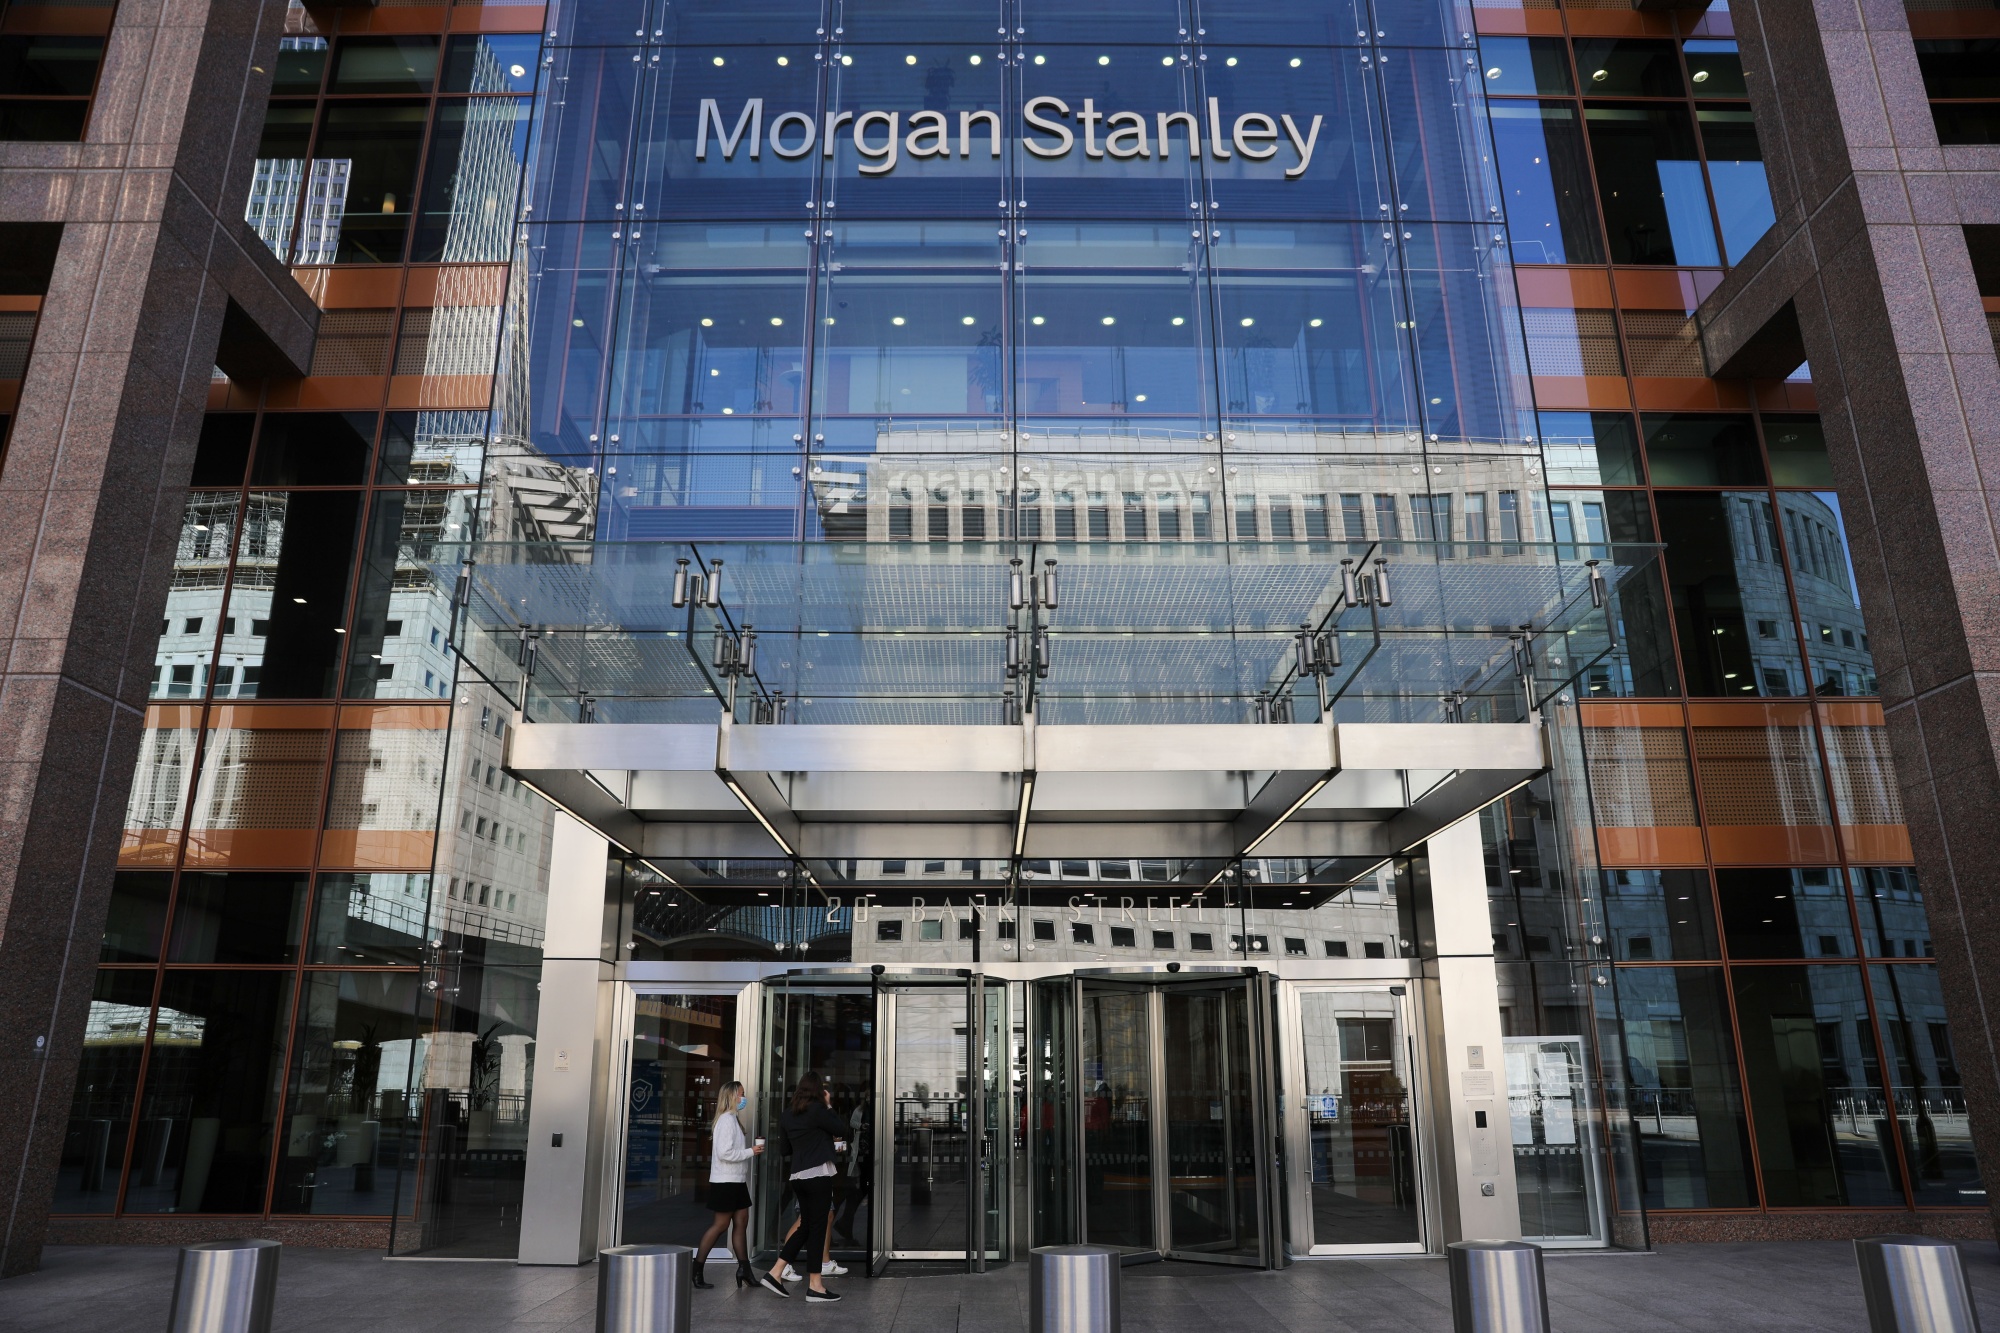 Morgan Stanley India Careers 2022 Hiring Freshers As Associate